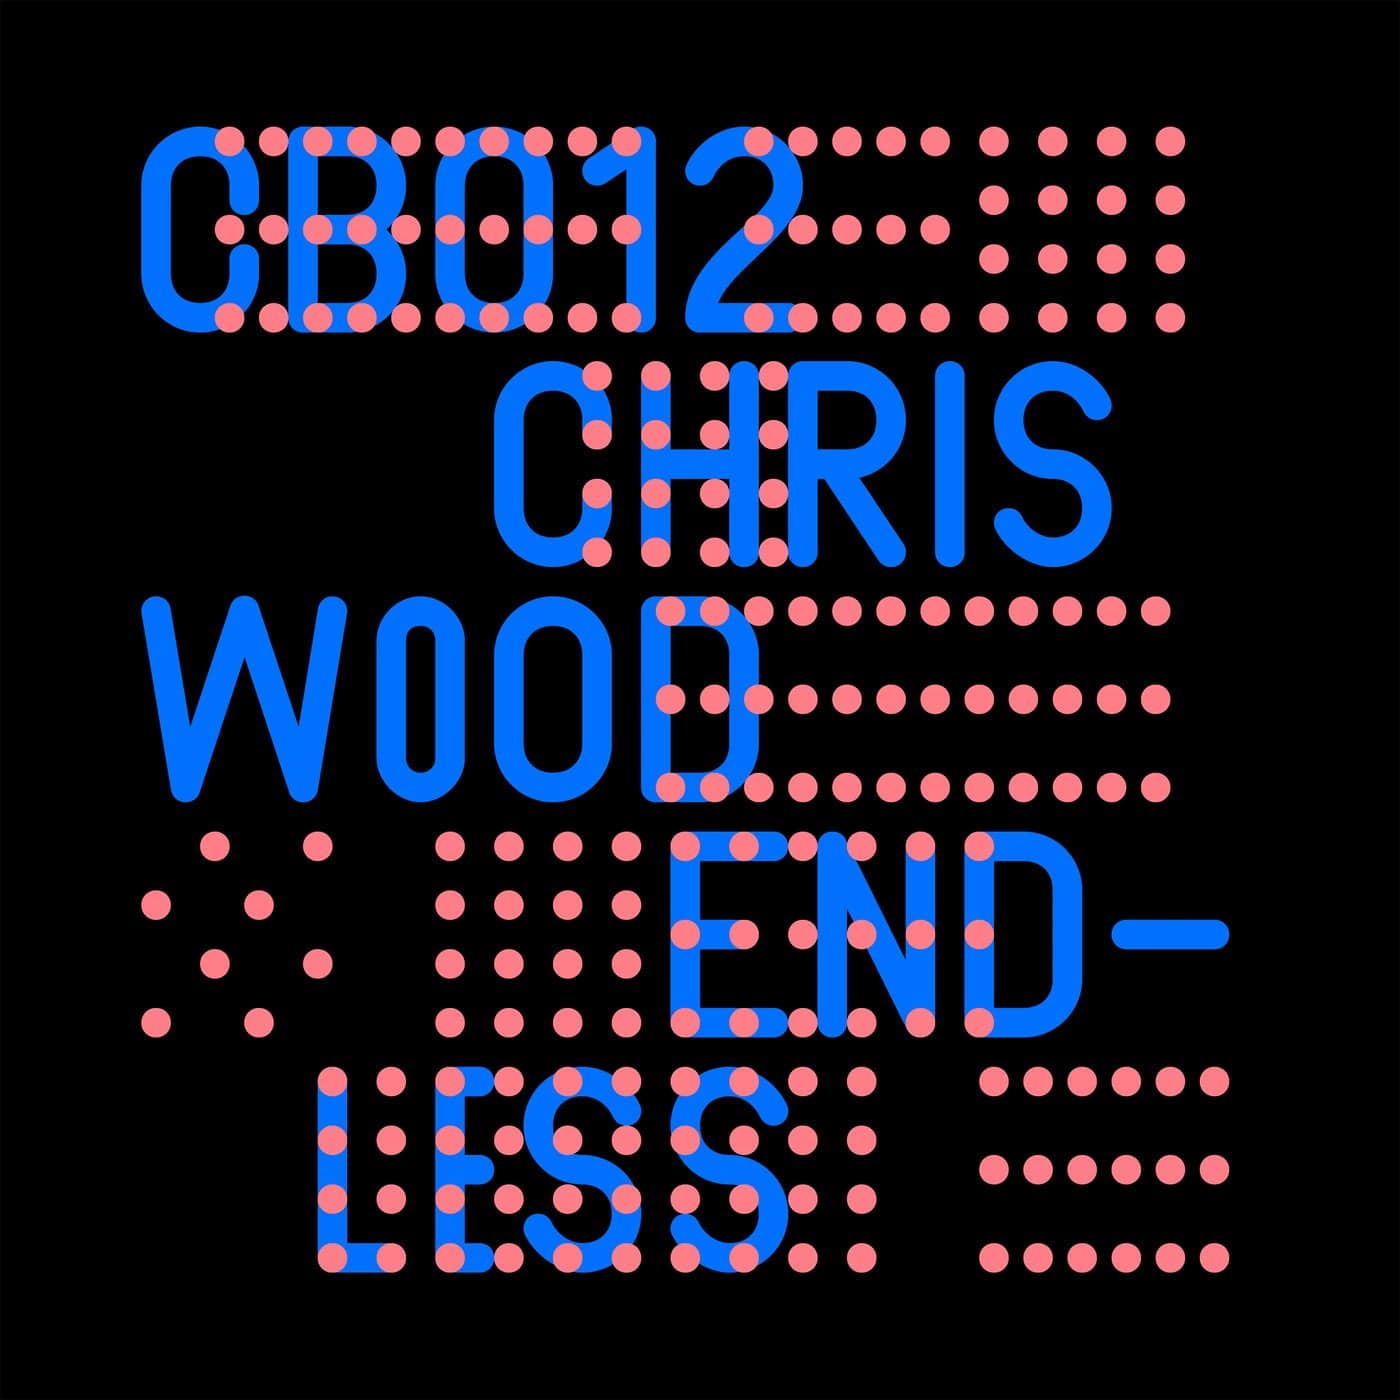 image cover: Chris Wood, Christian Burkhardt - Endless / CBS012